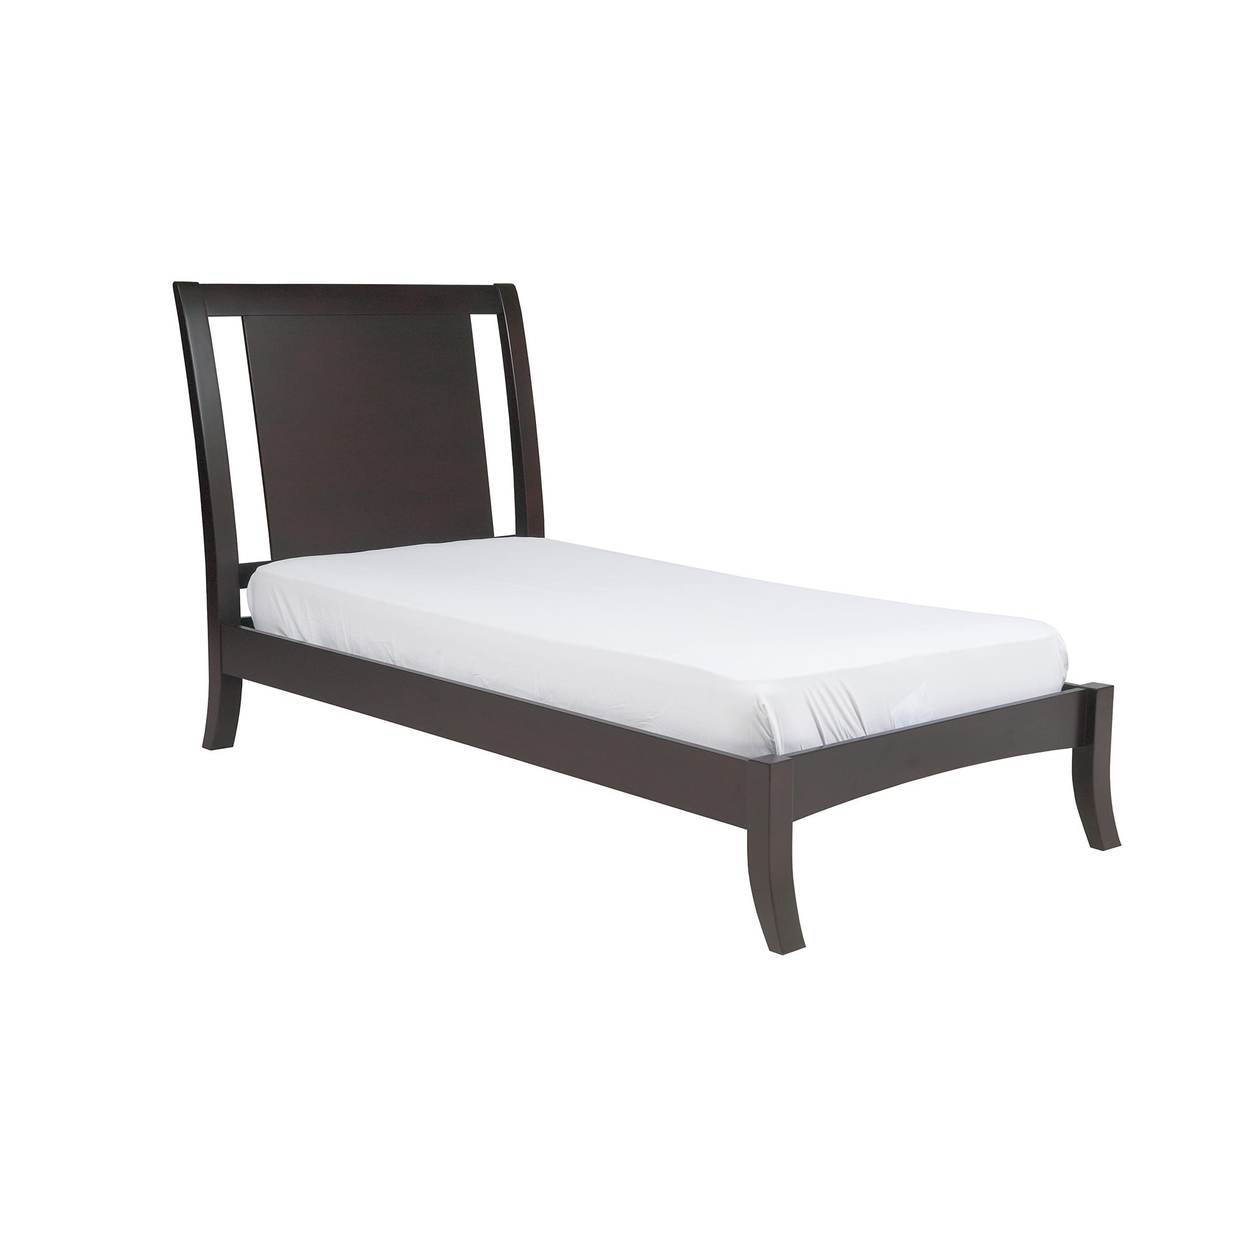 Fang Twin Size Bed, Sleigh Panel Headboard, Espresso Brown Mahogany Wood- Saltoro Sherpi